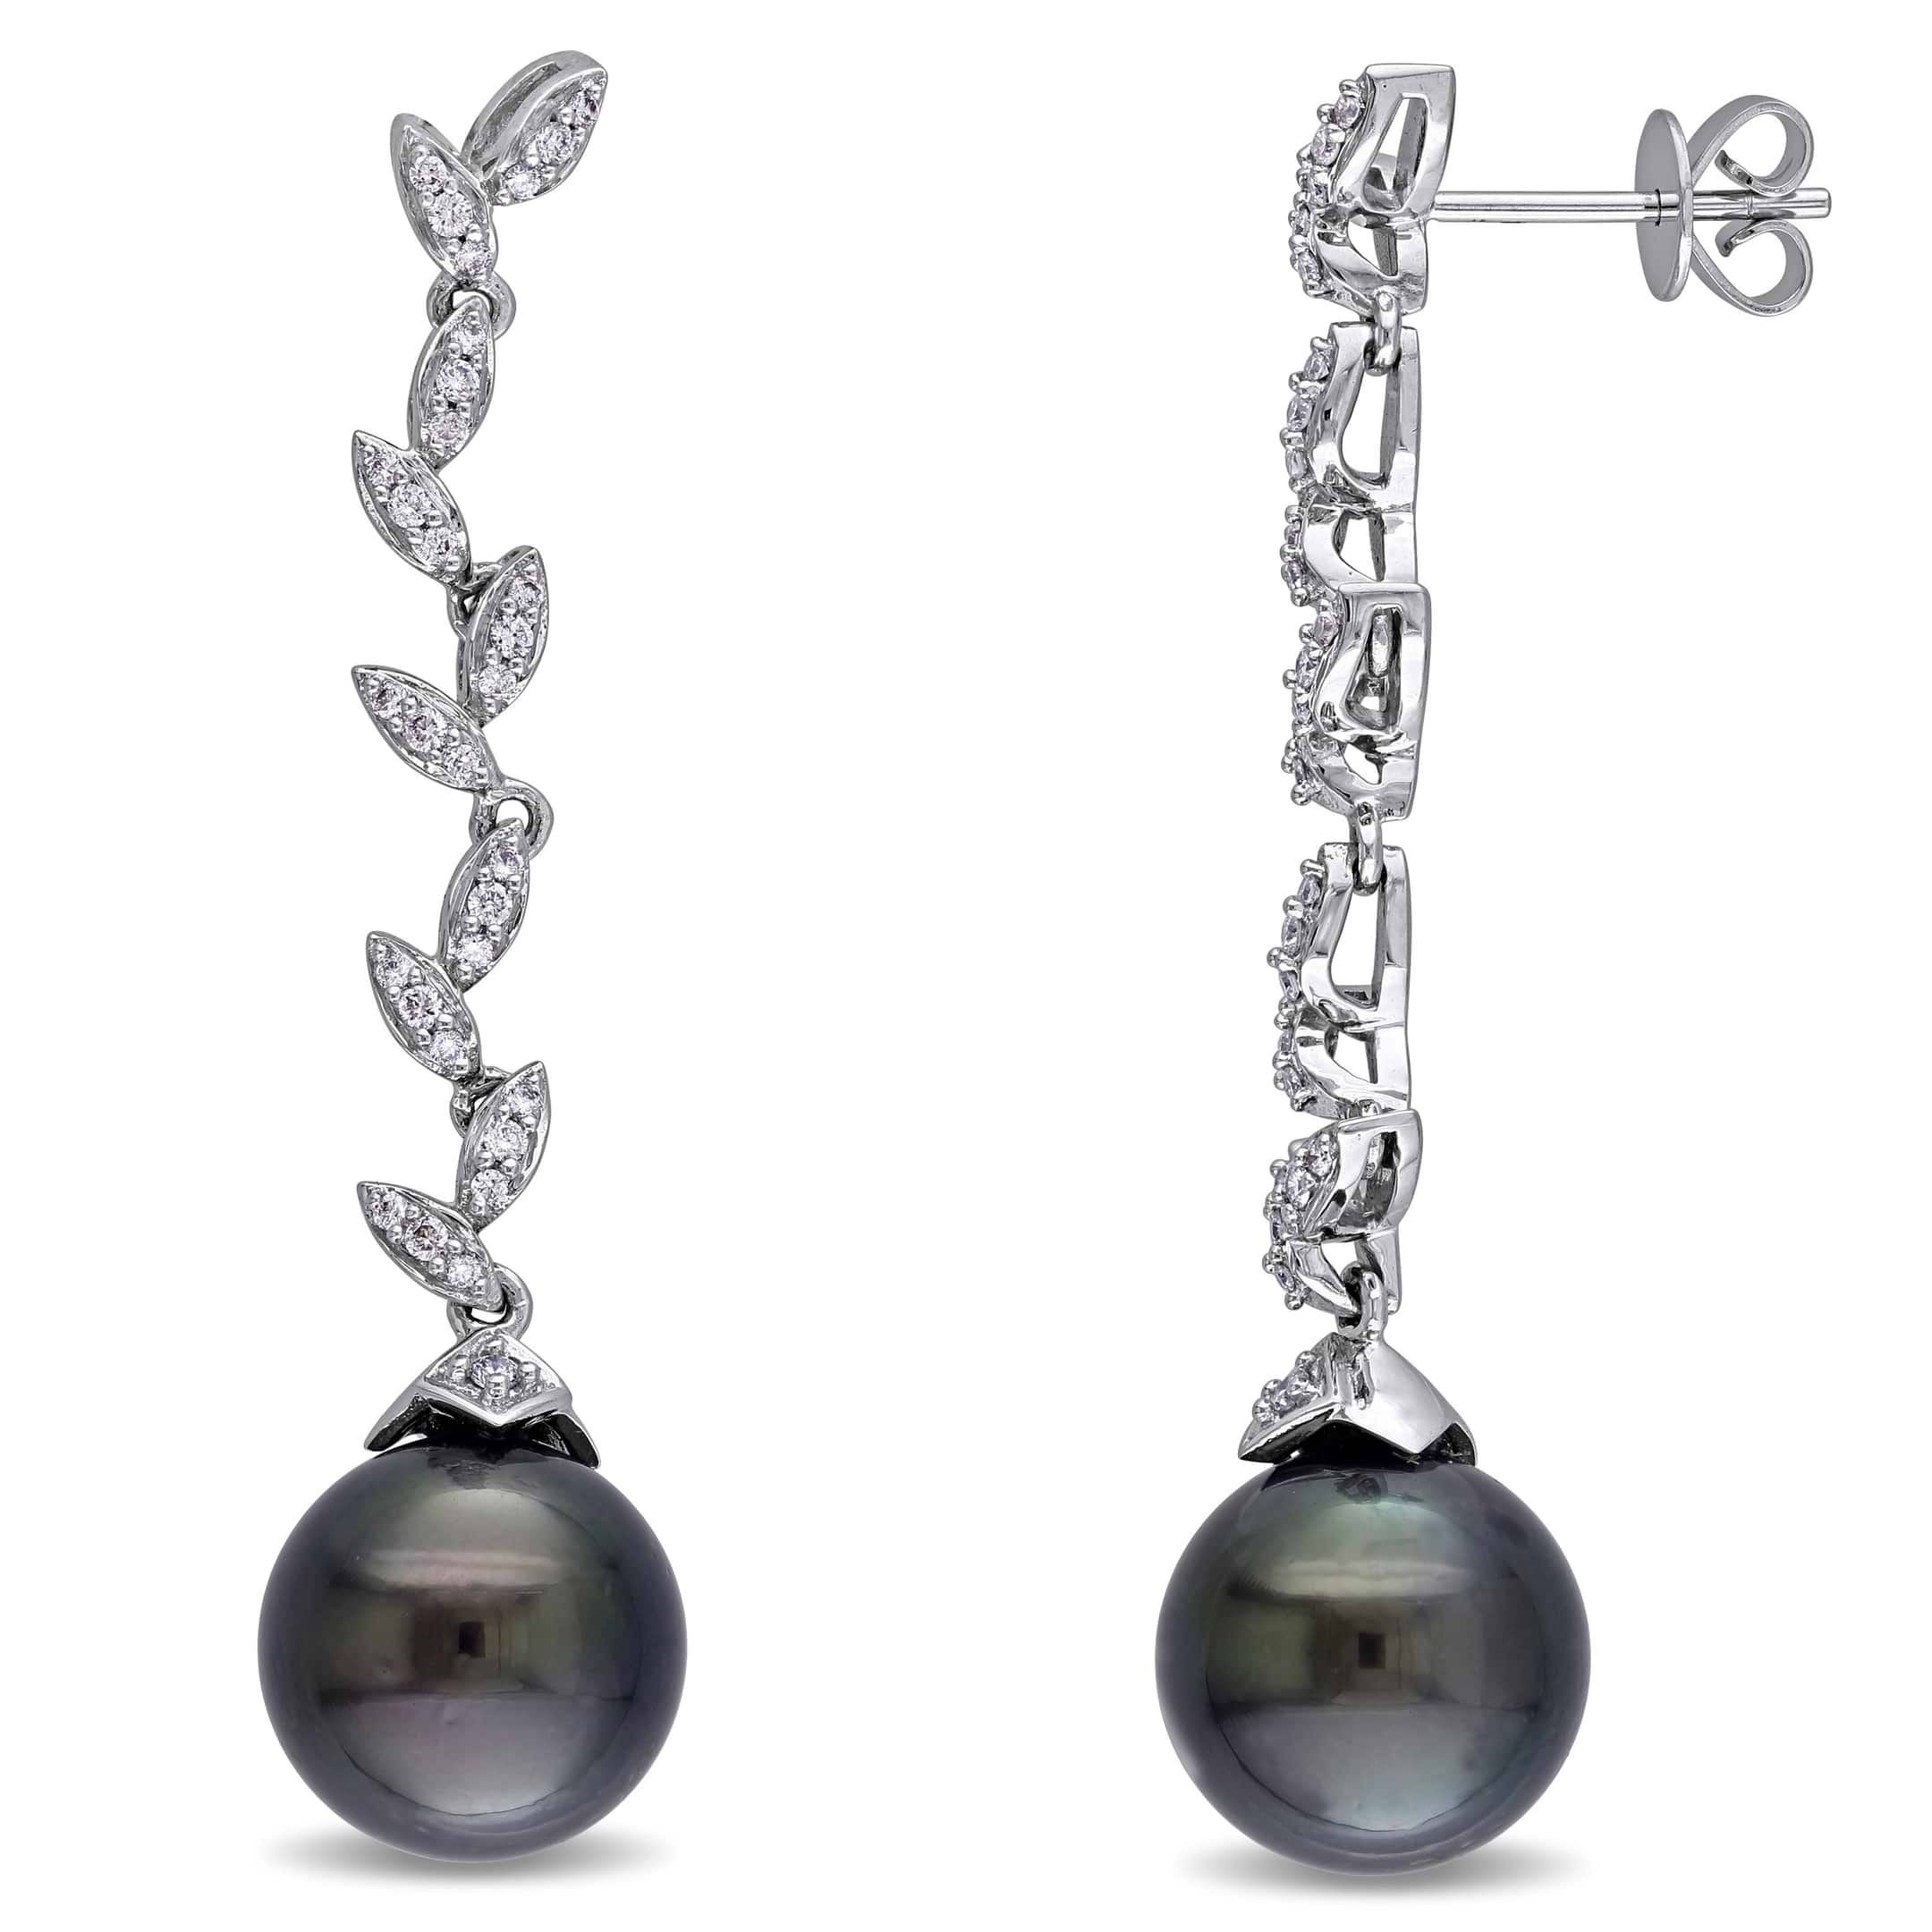 Diamond & Black Tahitian Pearl Dangle Earrings 14k W Gold (11-11.5mm)